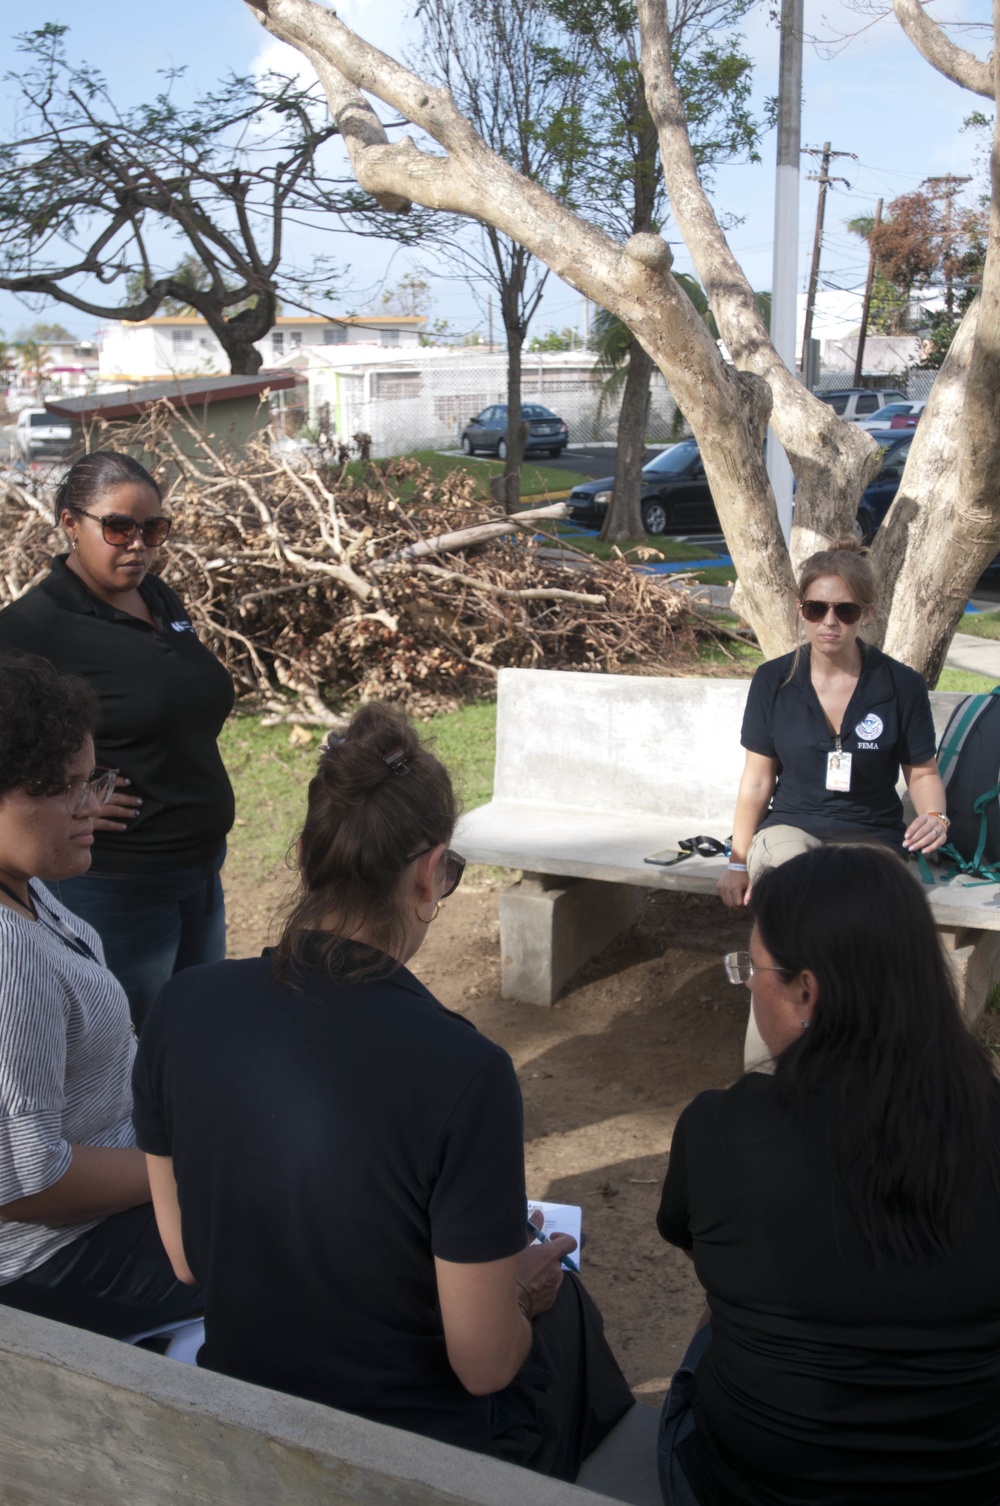 Help Where It's Needed: FEMA teams help Puerto Rico senior centers thrive